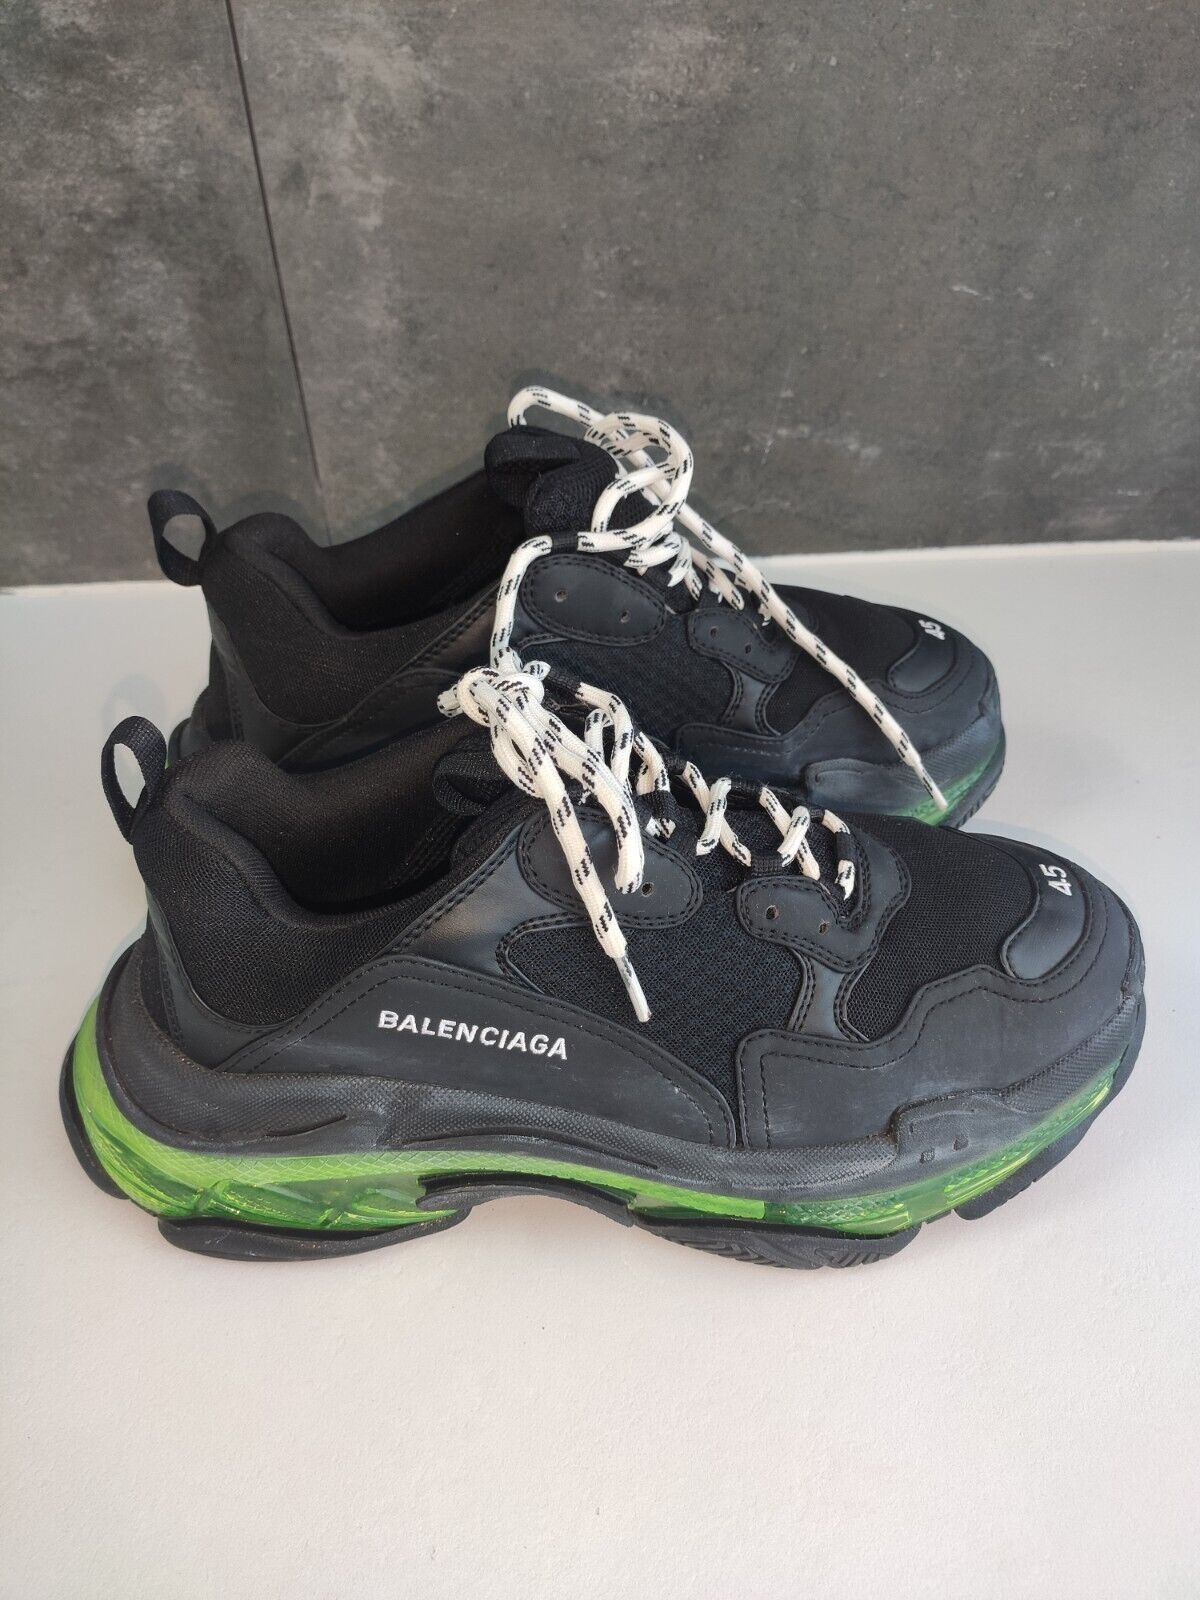 BALENCIAGA TRIPLE S 541624 Black Green Clear Sole Sneakers Size EU 45, US 12